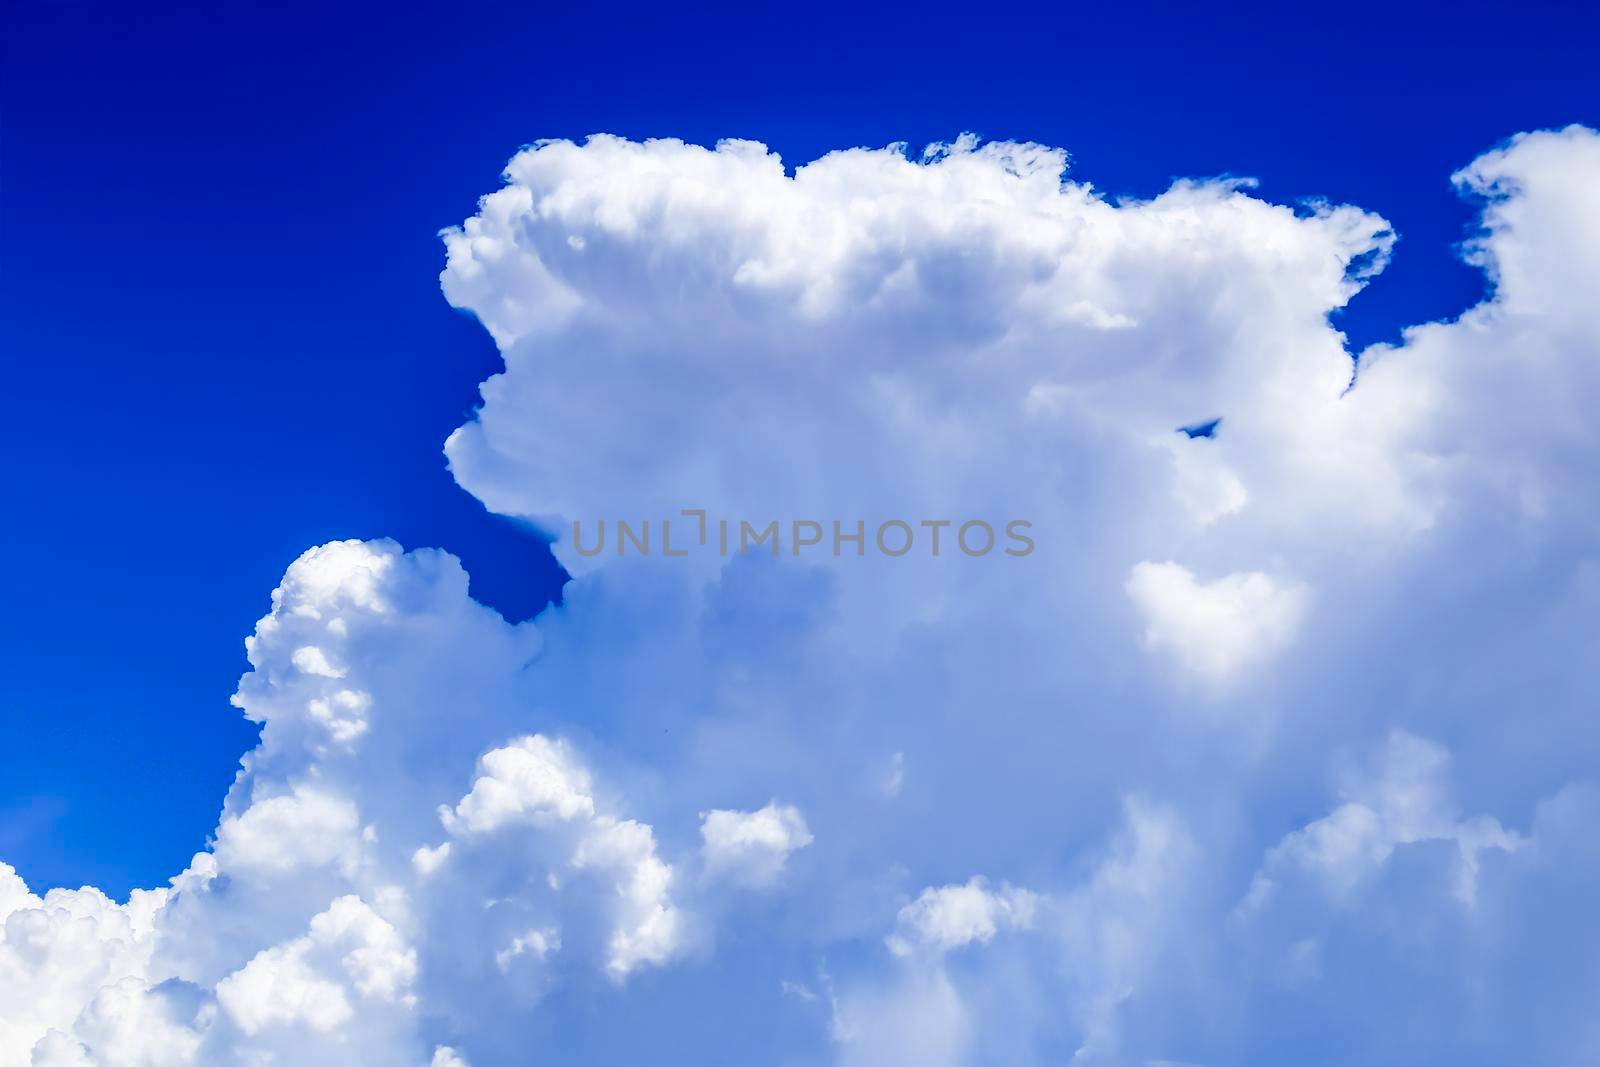 Sky with Cumulonimbus clouds in Spain in summer before storm